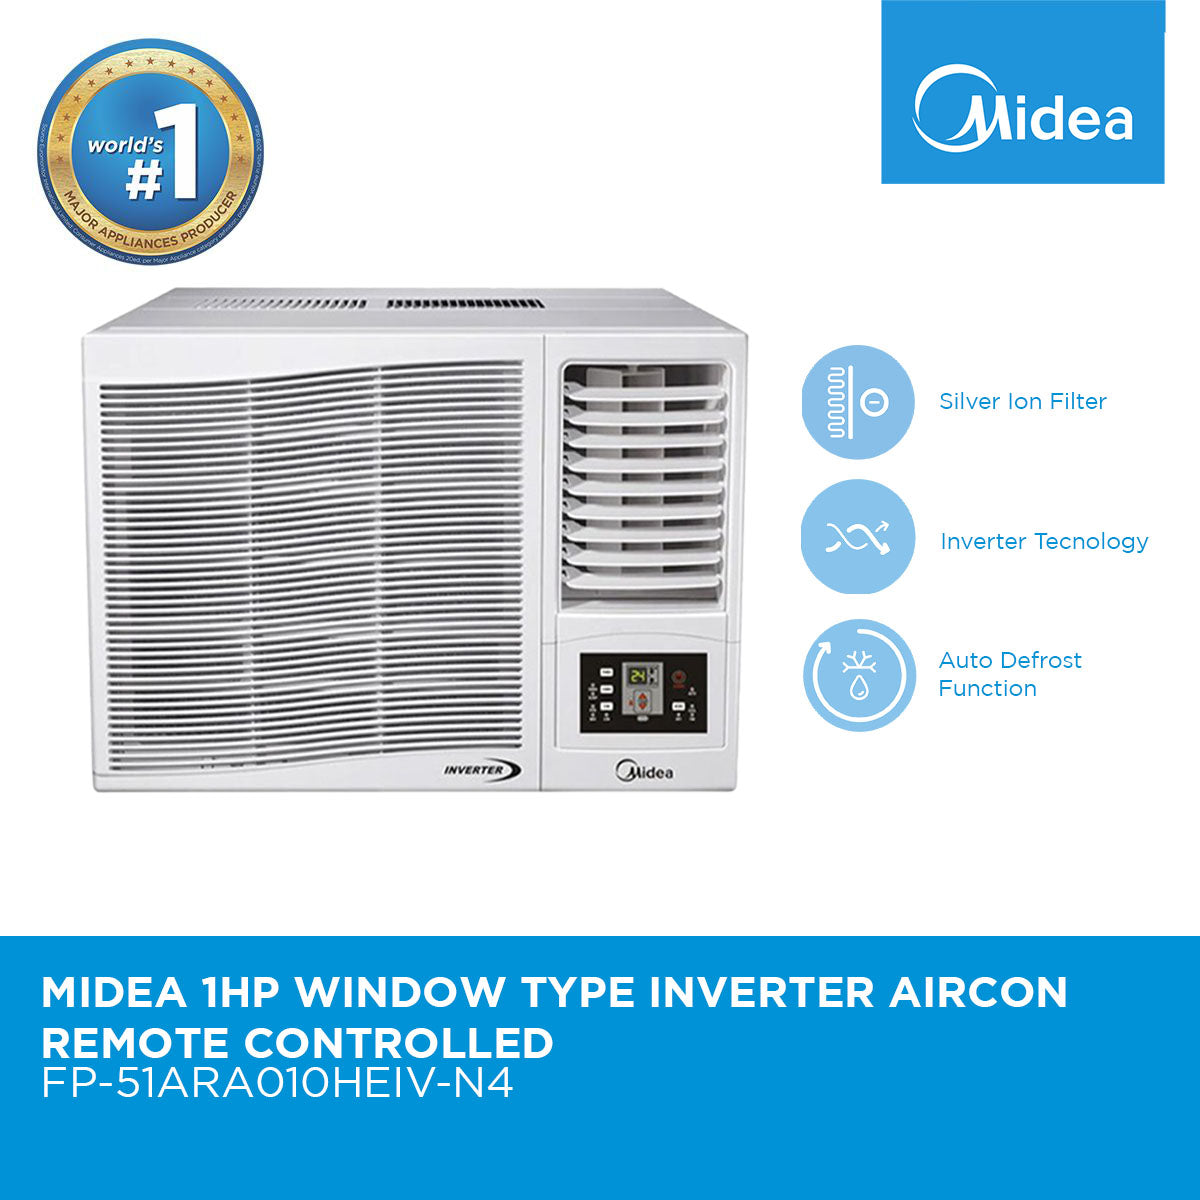 Midea 1.0 HP Window Type Inverter Aircon - Remote Controlled